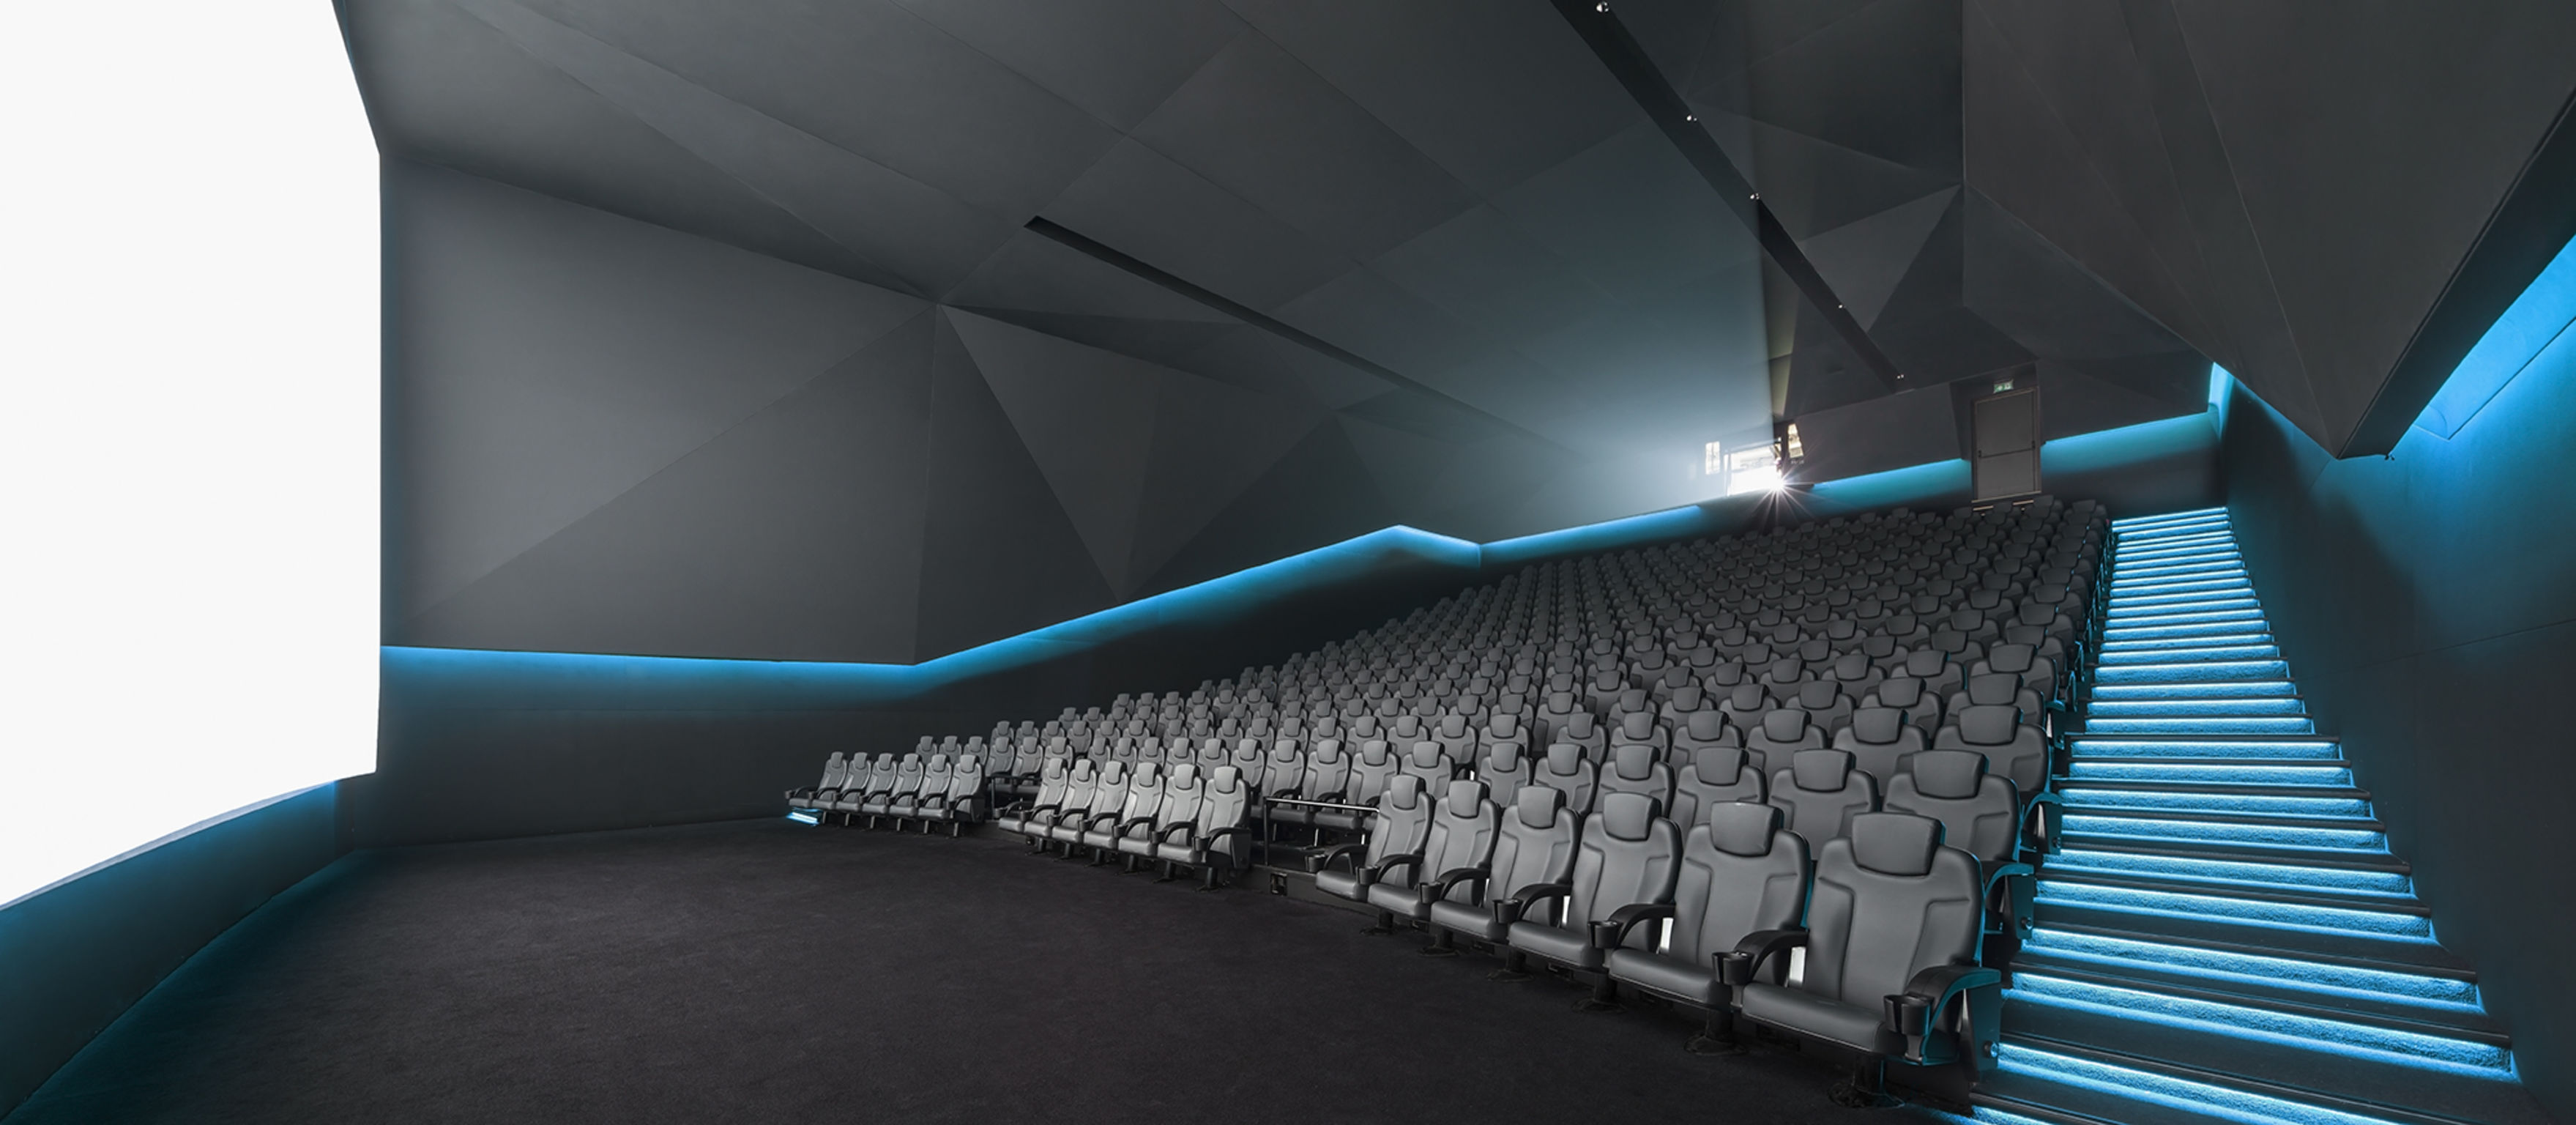 Dolby Cinema™